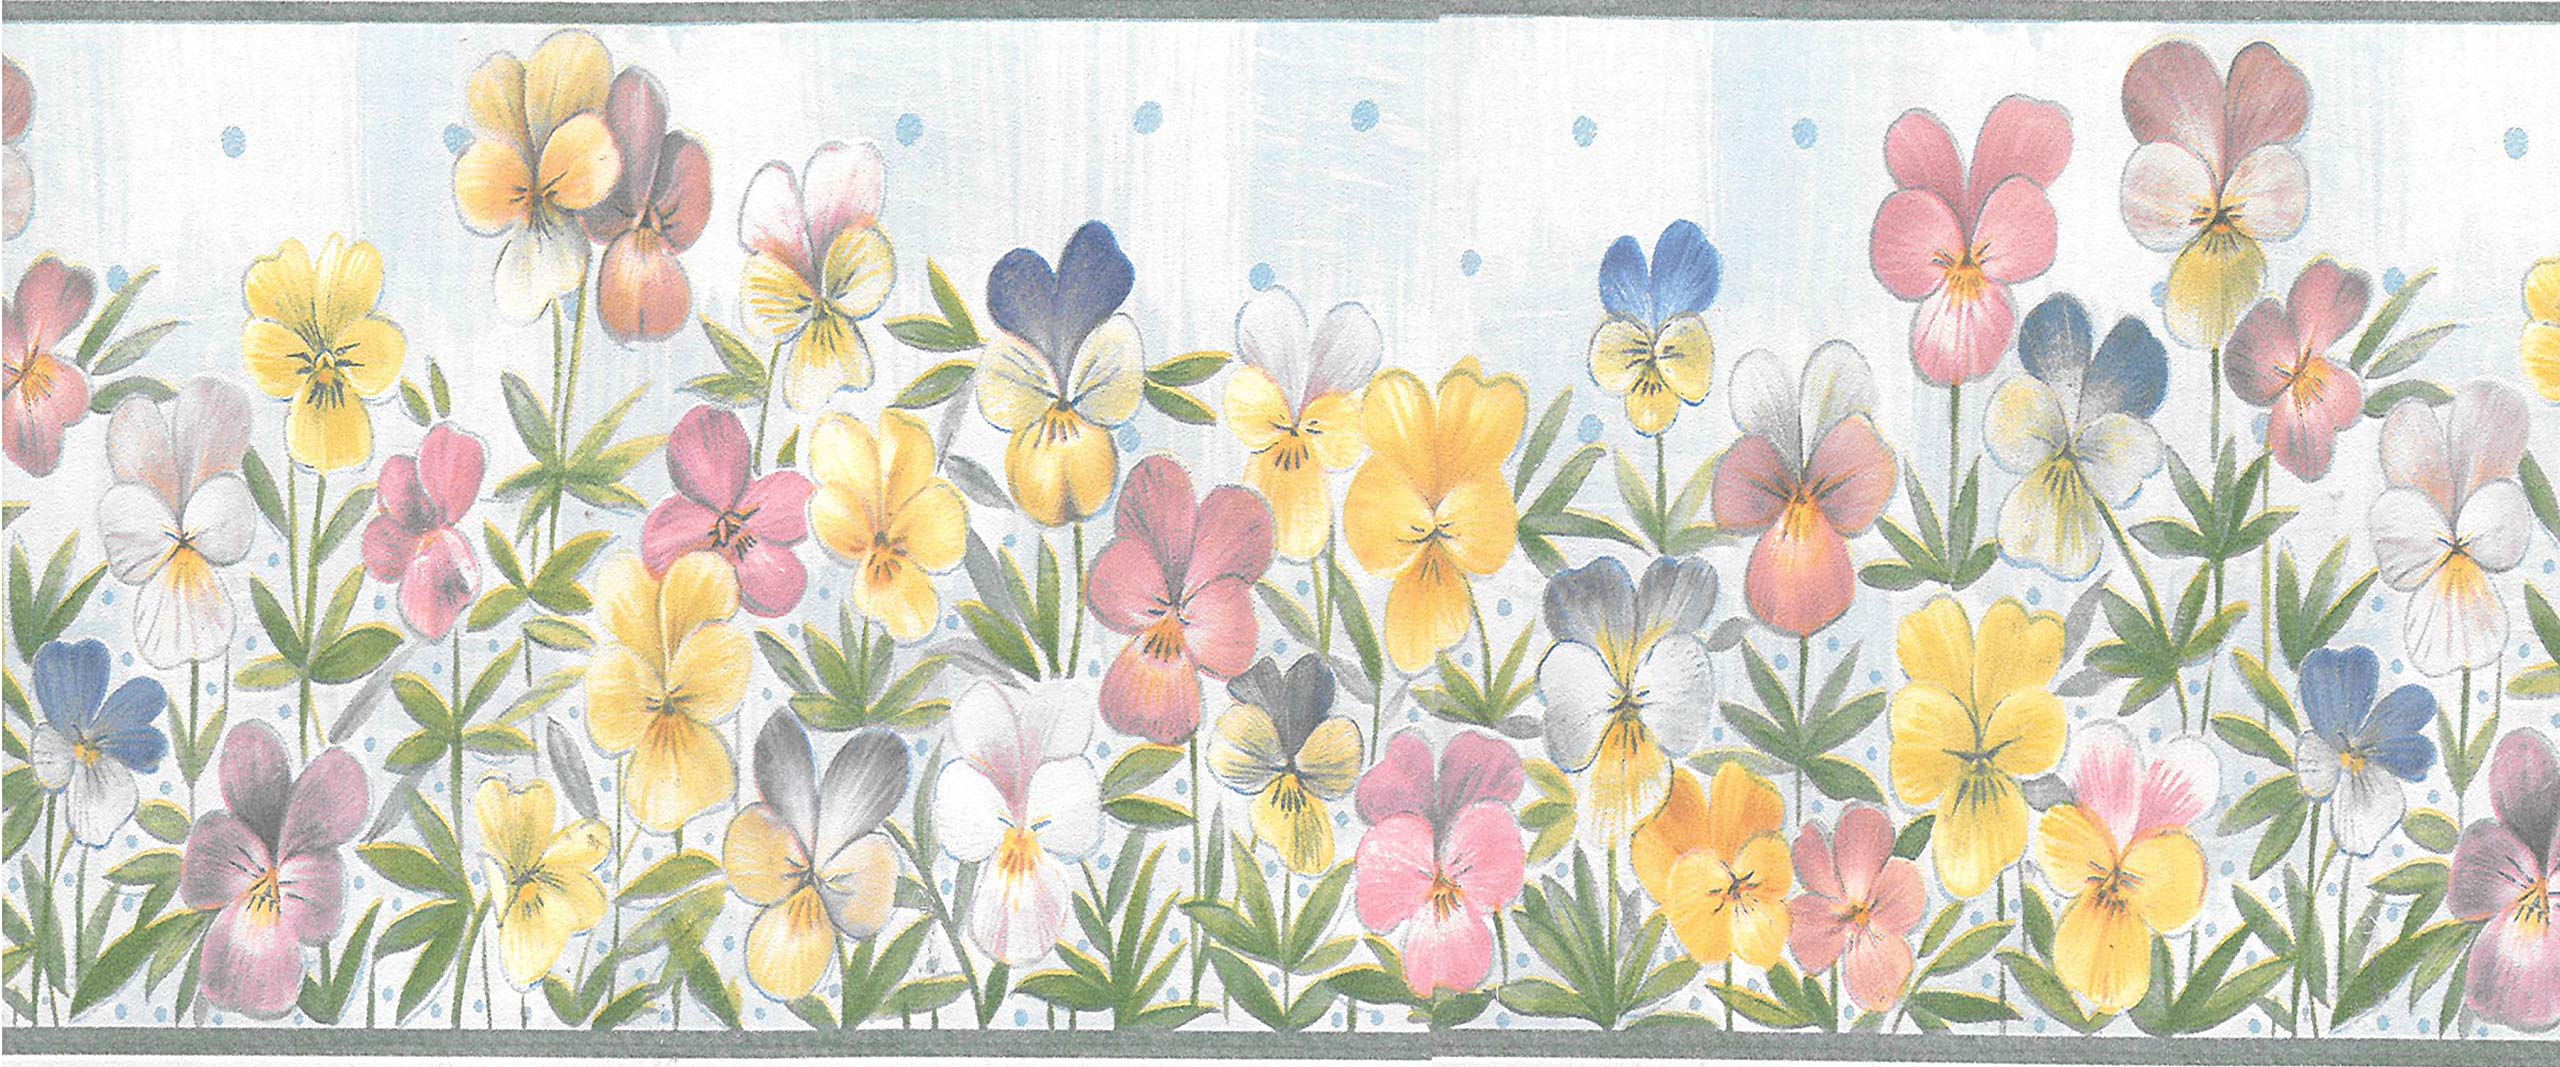 Yellow Hugs & Kisses Wallpaper Roll W1028 Pink Blue Flowers Floral Pattern 